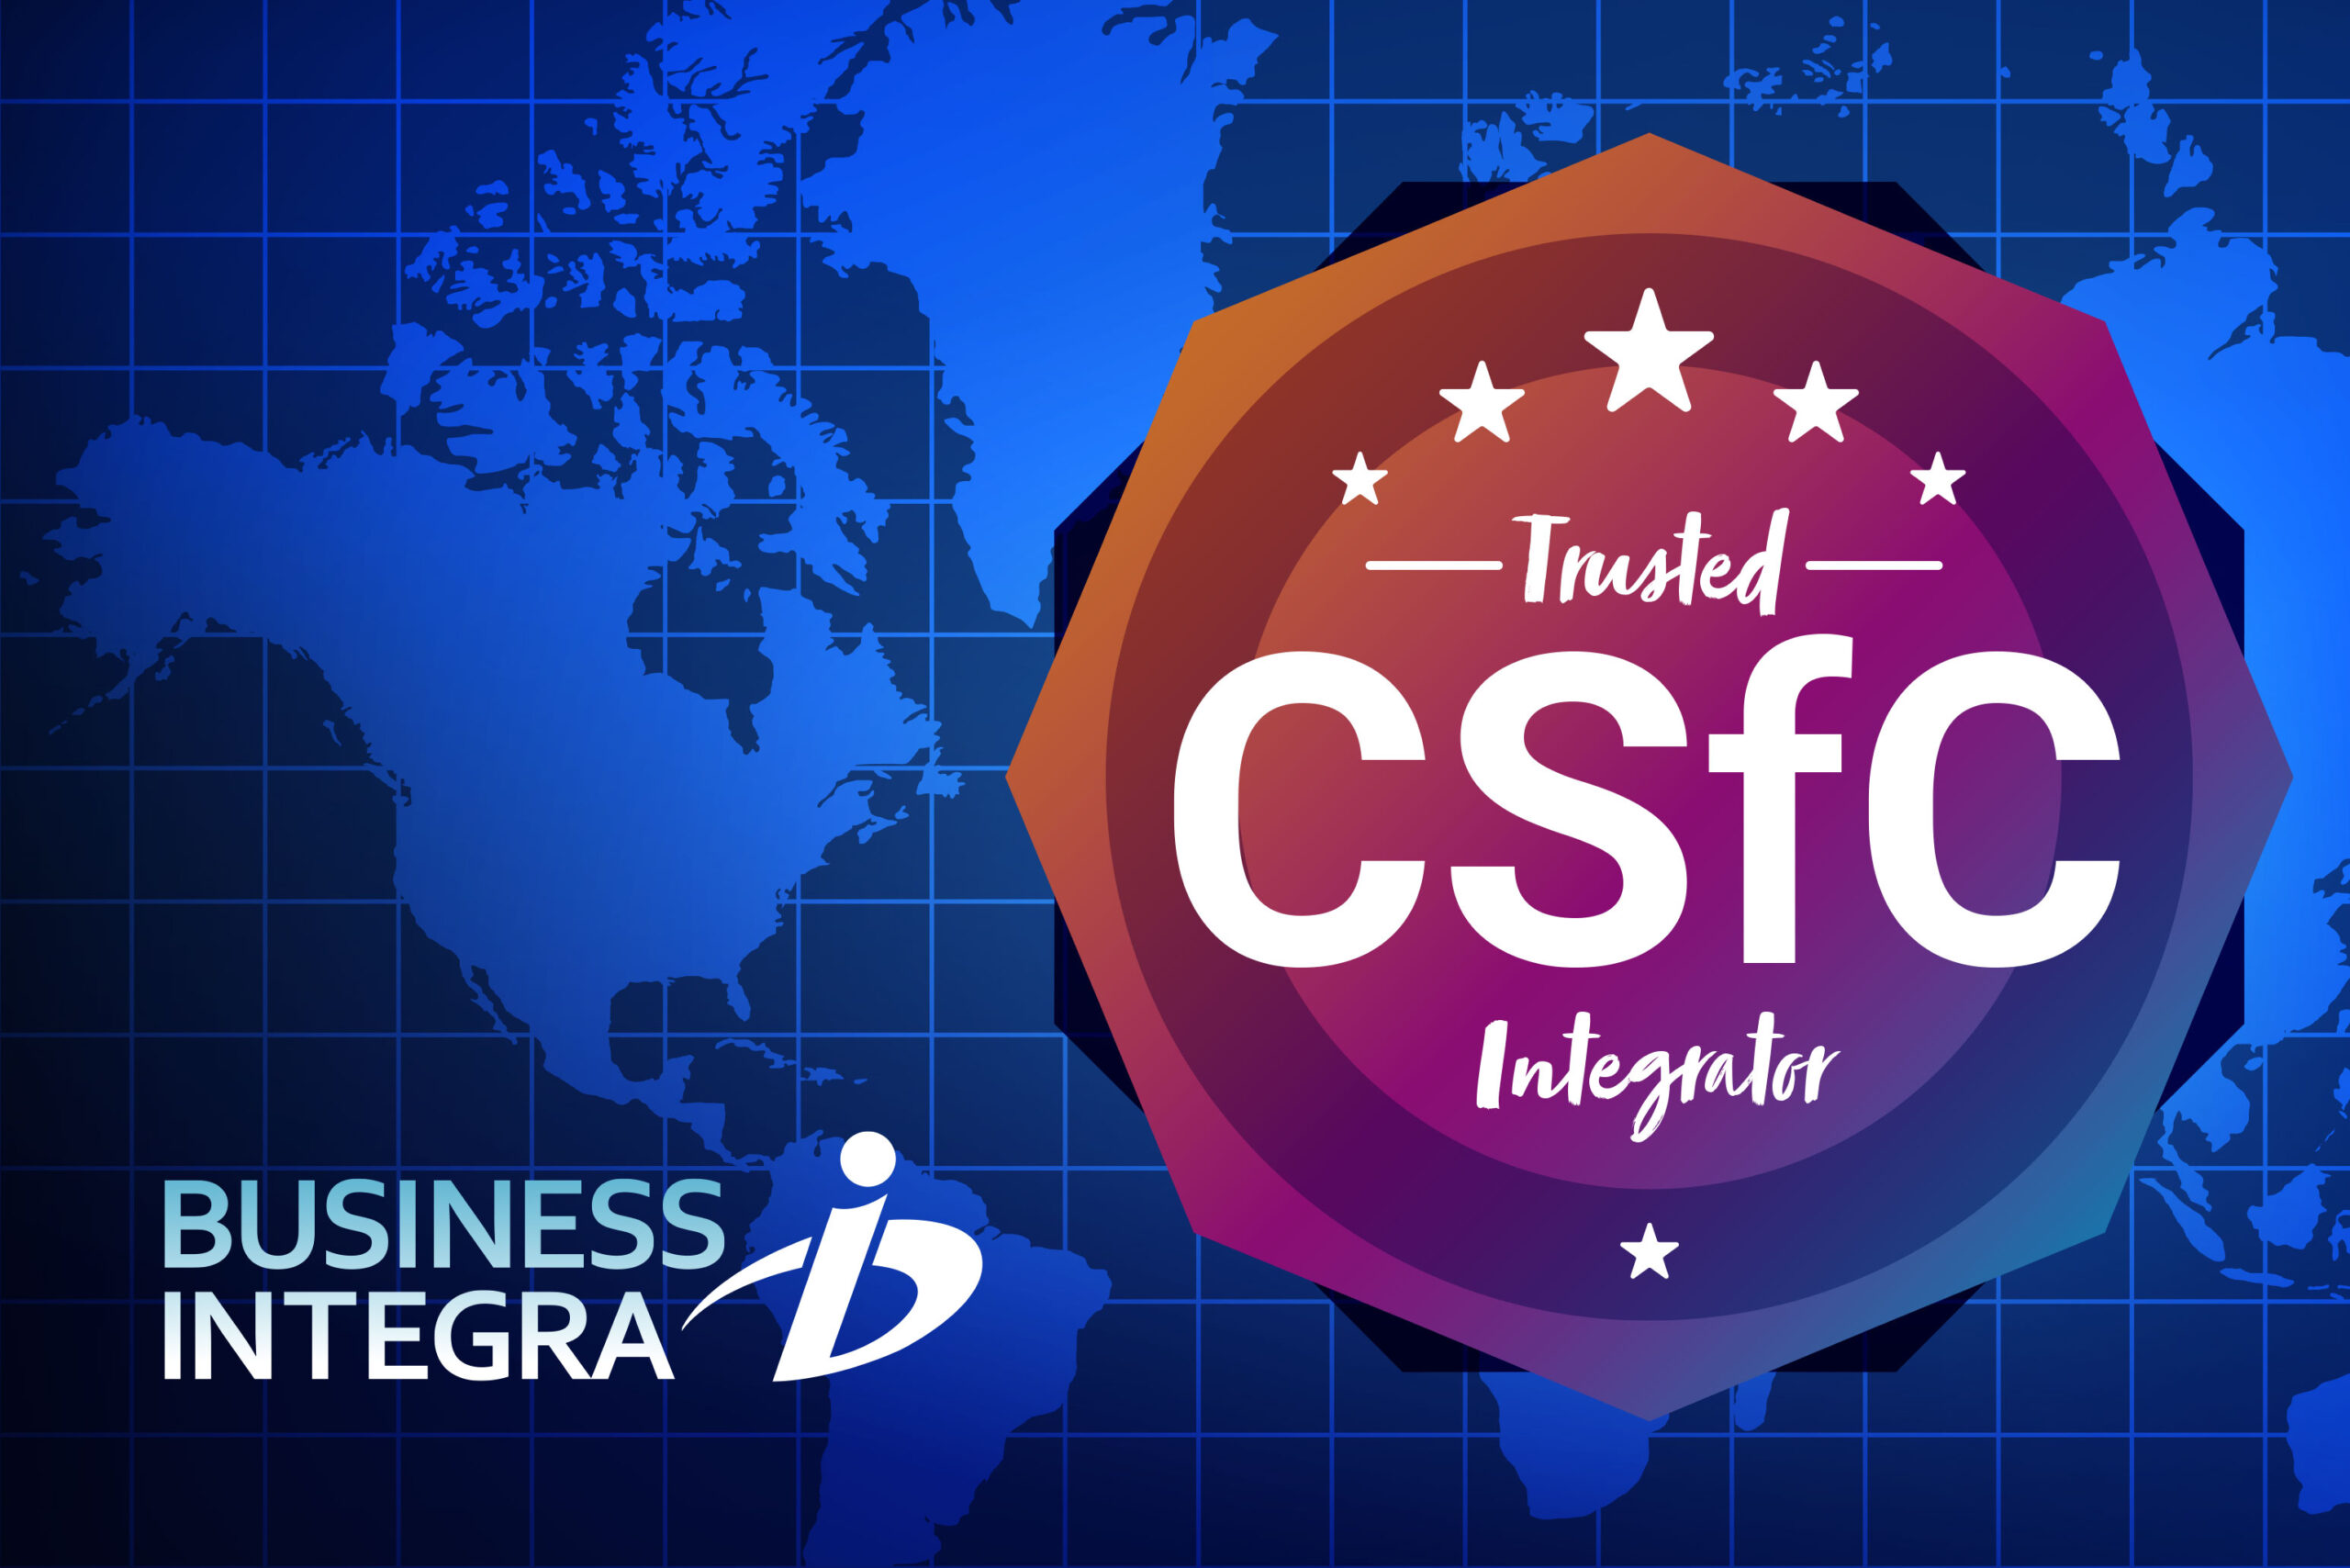 Business Integra (Logo) - Trusted CSfC Integrator